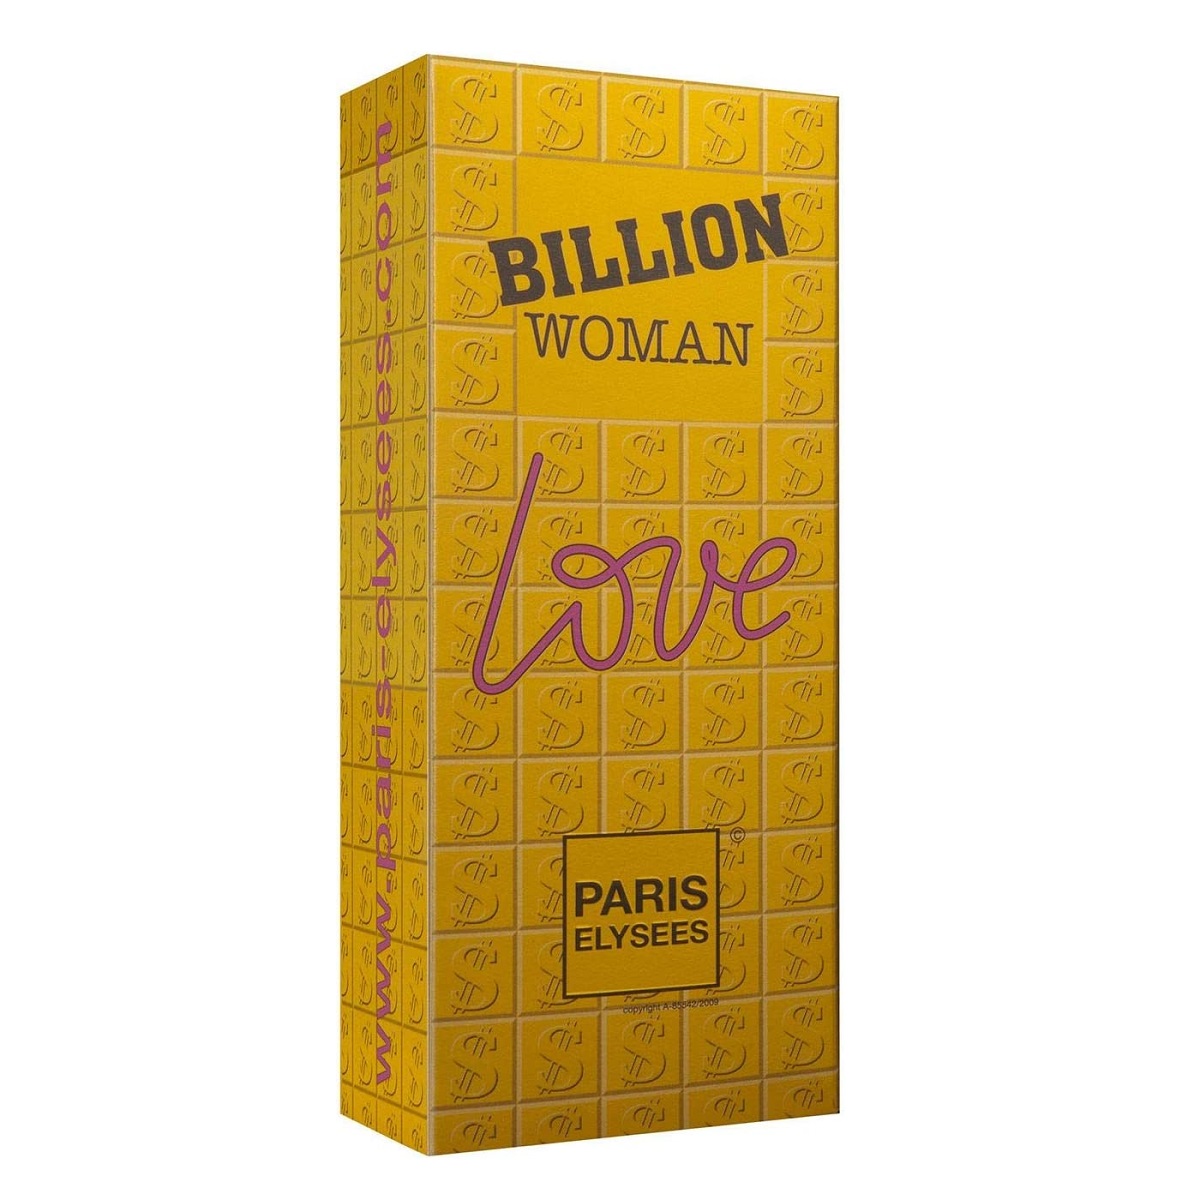 Perfume Billion Woman Love Paris Elysees 100ml - Foto 2